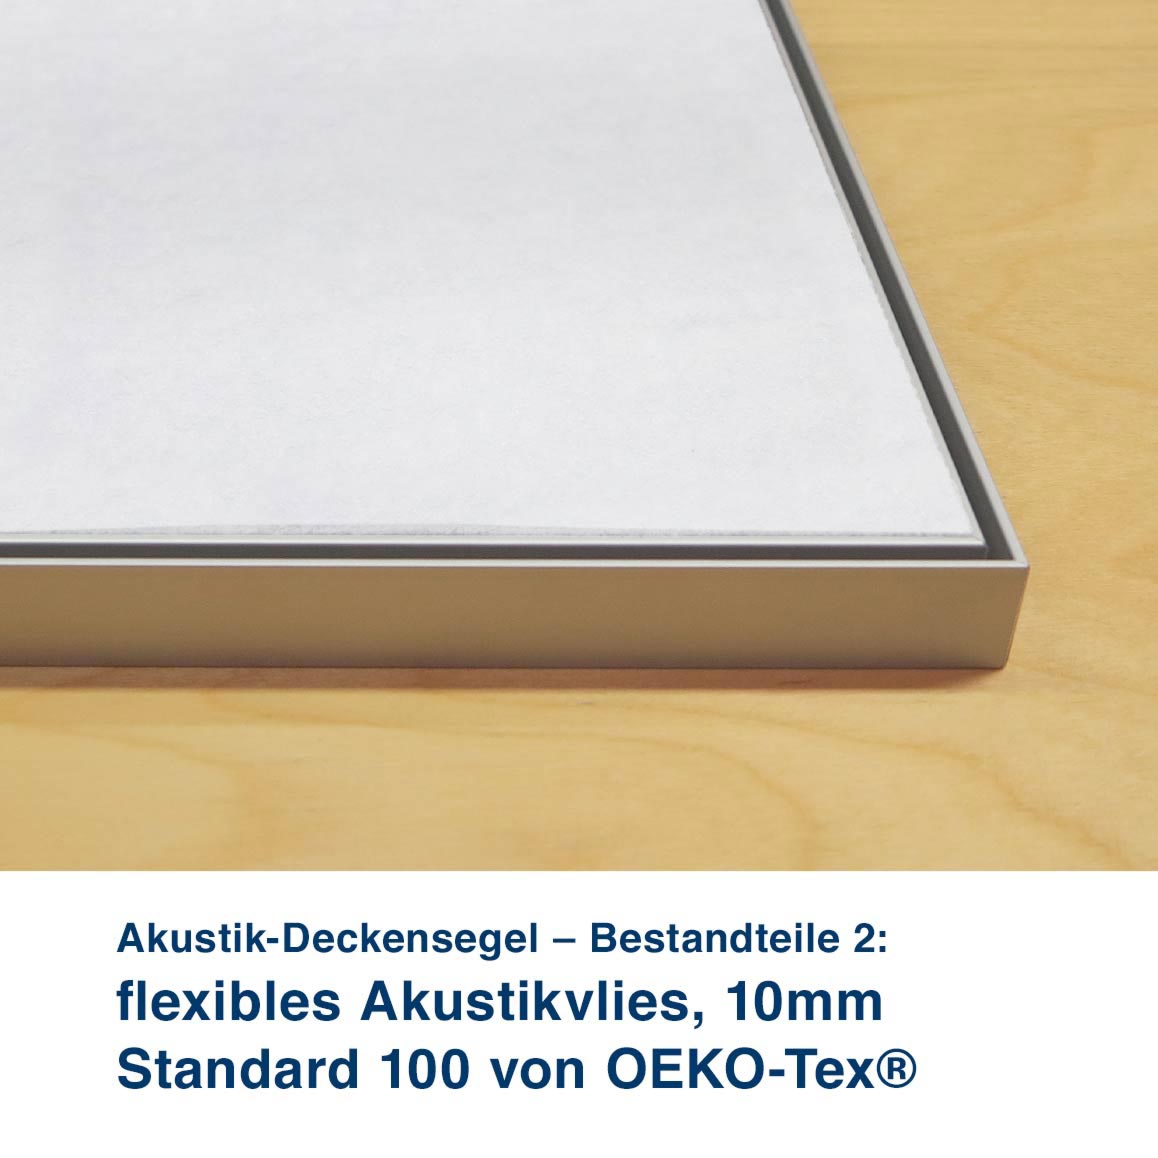 Akustik-Deckensegel – Bestandteile 2:  flexibles Akustikvlies, 10mm  Standard 100 von OEKO-Tex® feste Akustikplatte, 18mm